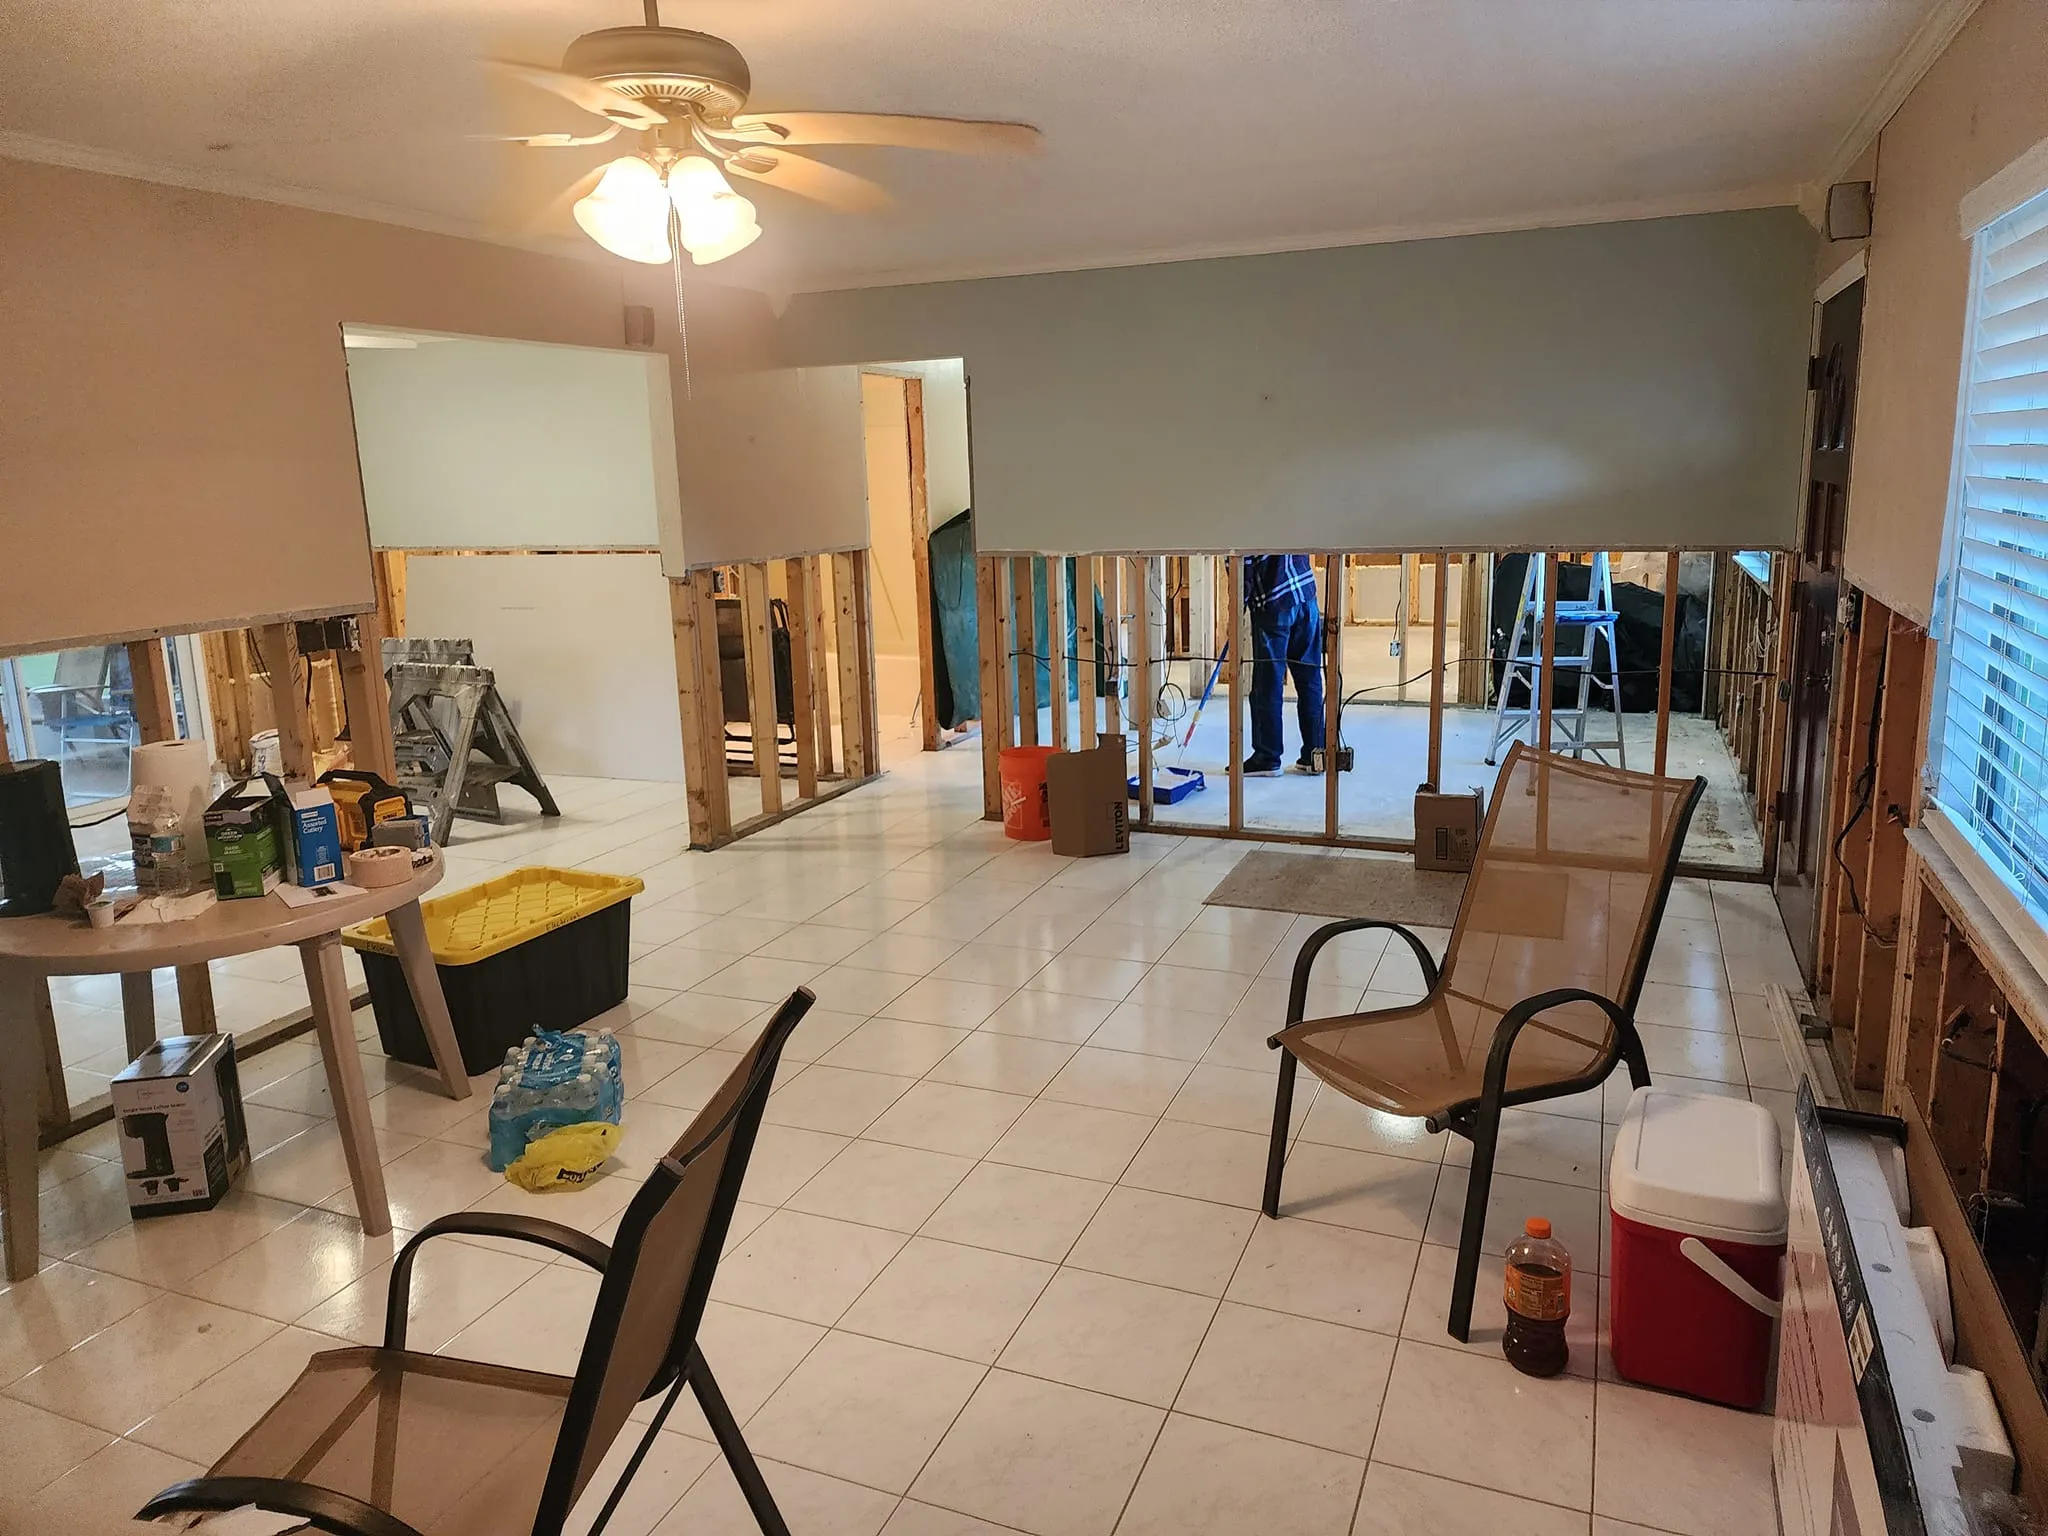 Kitchen Renovation for Fawcett Construction Inc. in Port Saint Lucie, FL